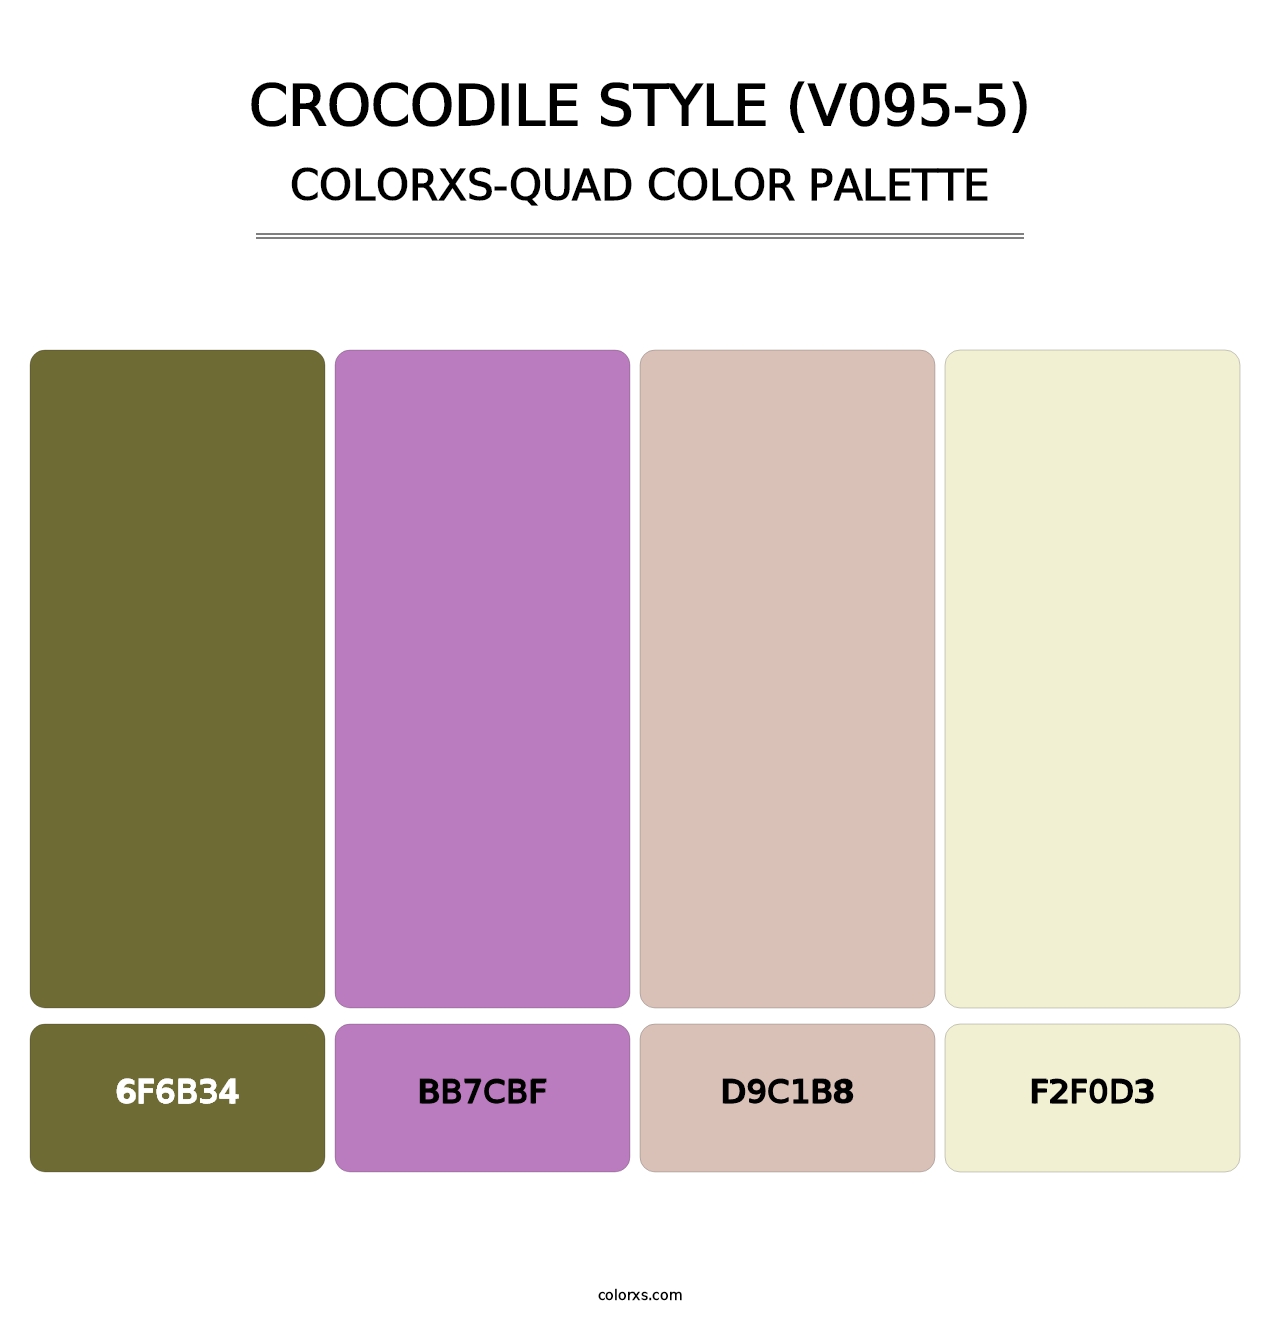 Crocodile Style (V095-5) - Colorxs Quad Palette